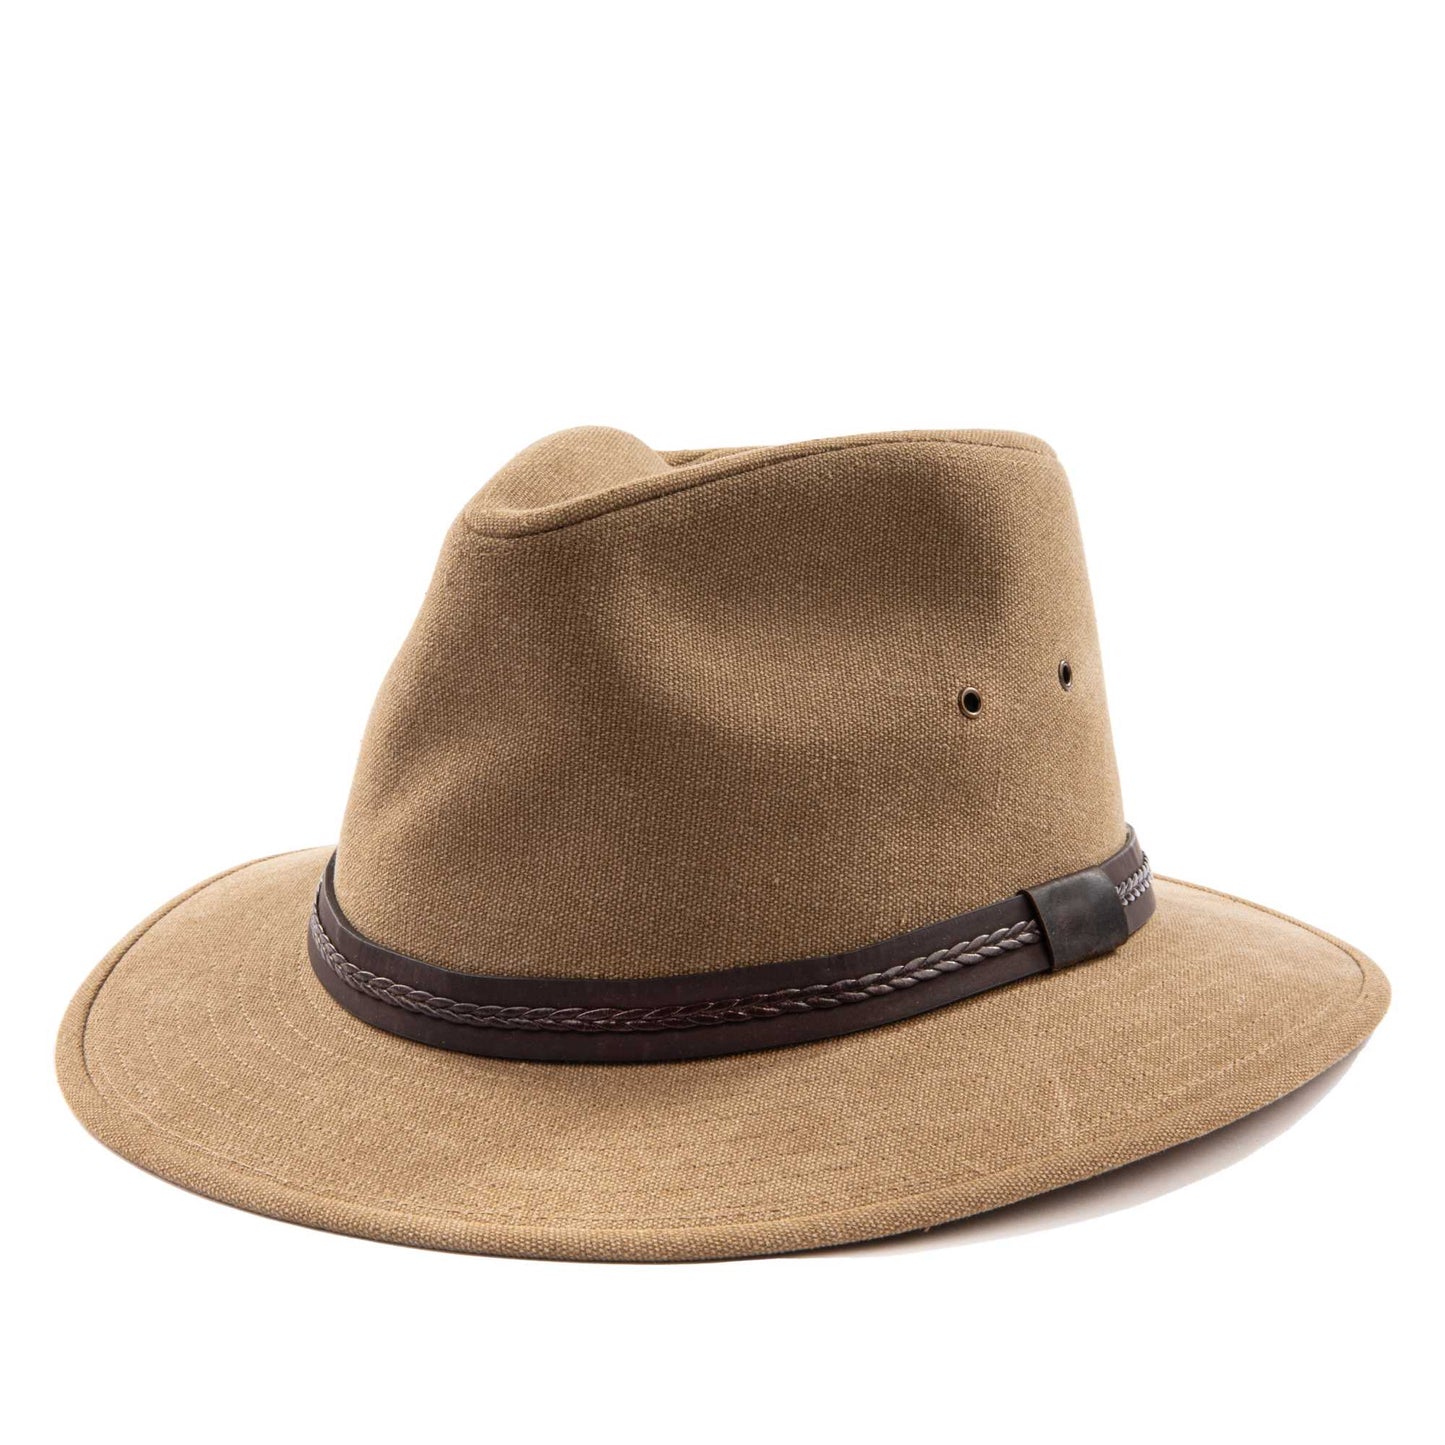 Faustmann Fedora hat, Cotton Canvas - Natural